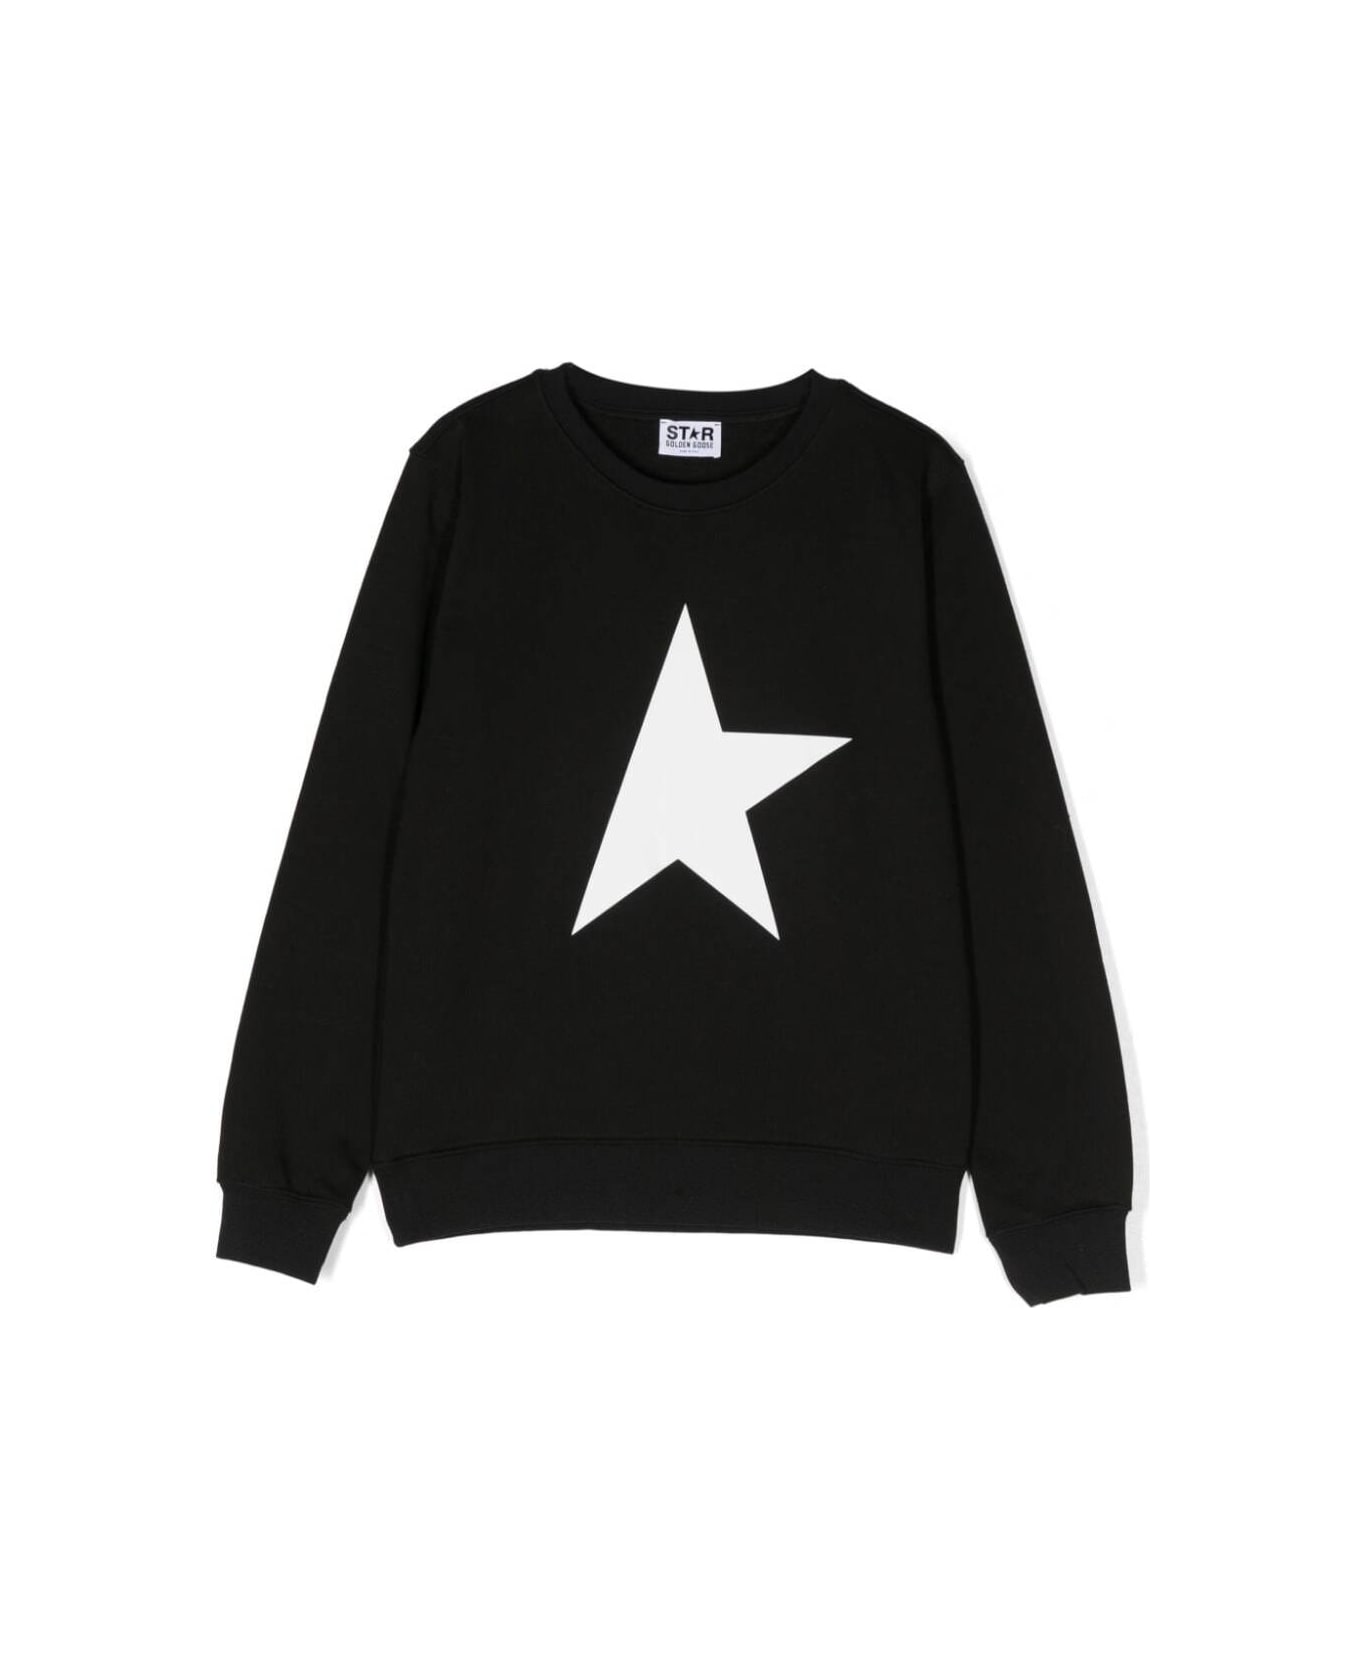 Golden Goose Black Crewneck Sweatshirt With Big Star Print In Cotton Boy - Black